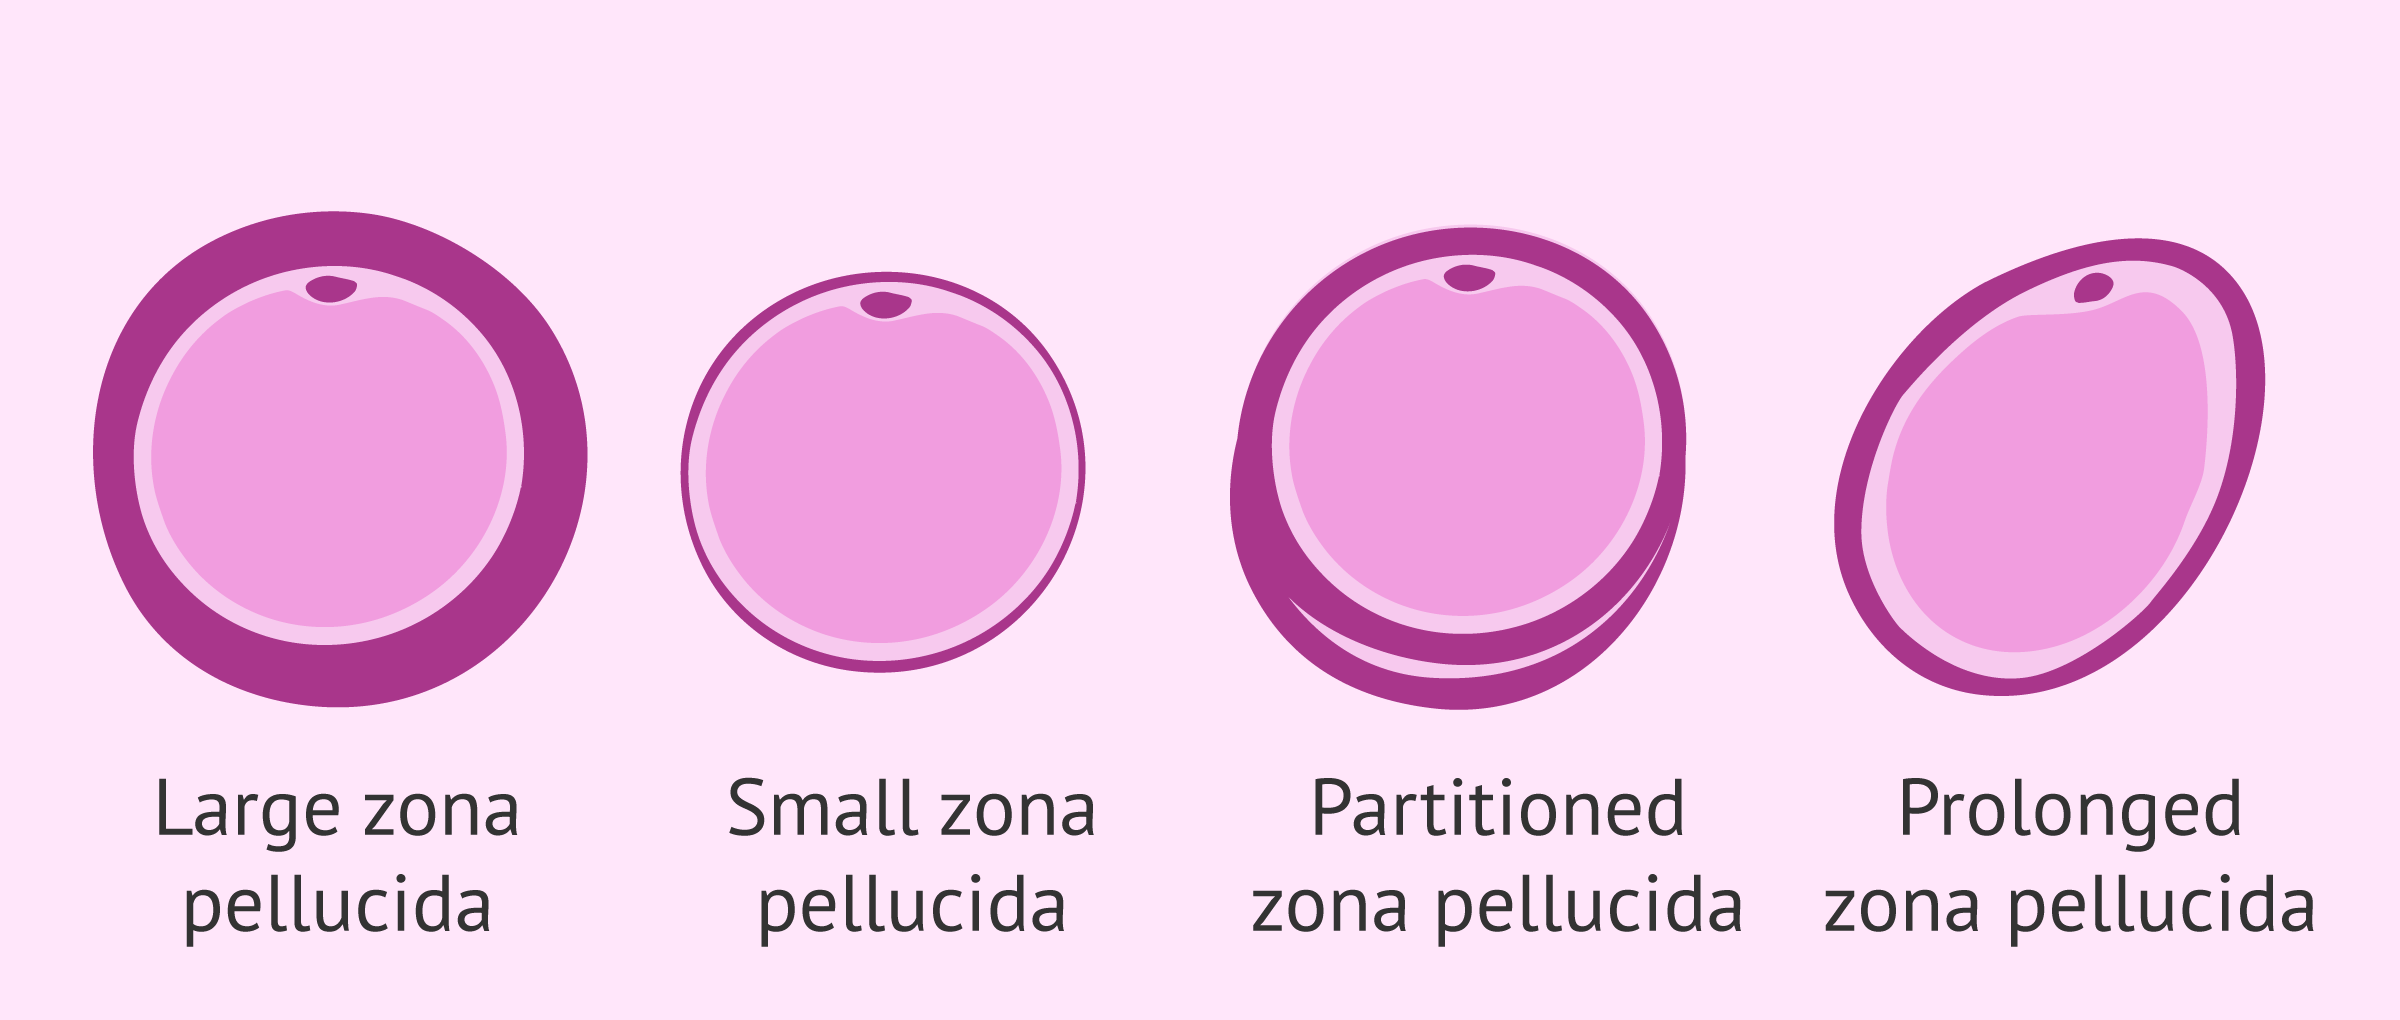 Alterations in the zona pellucida